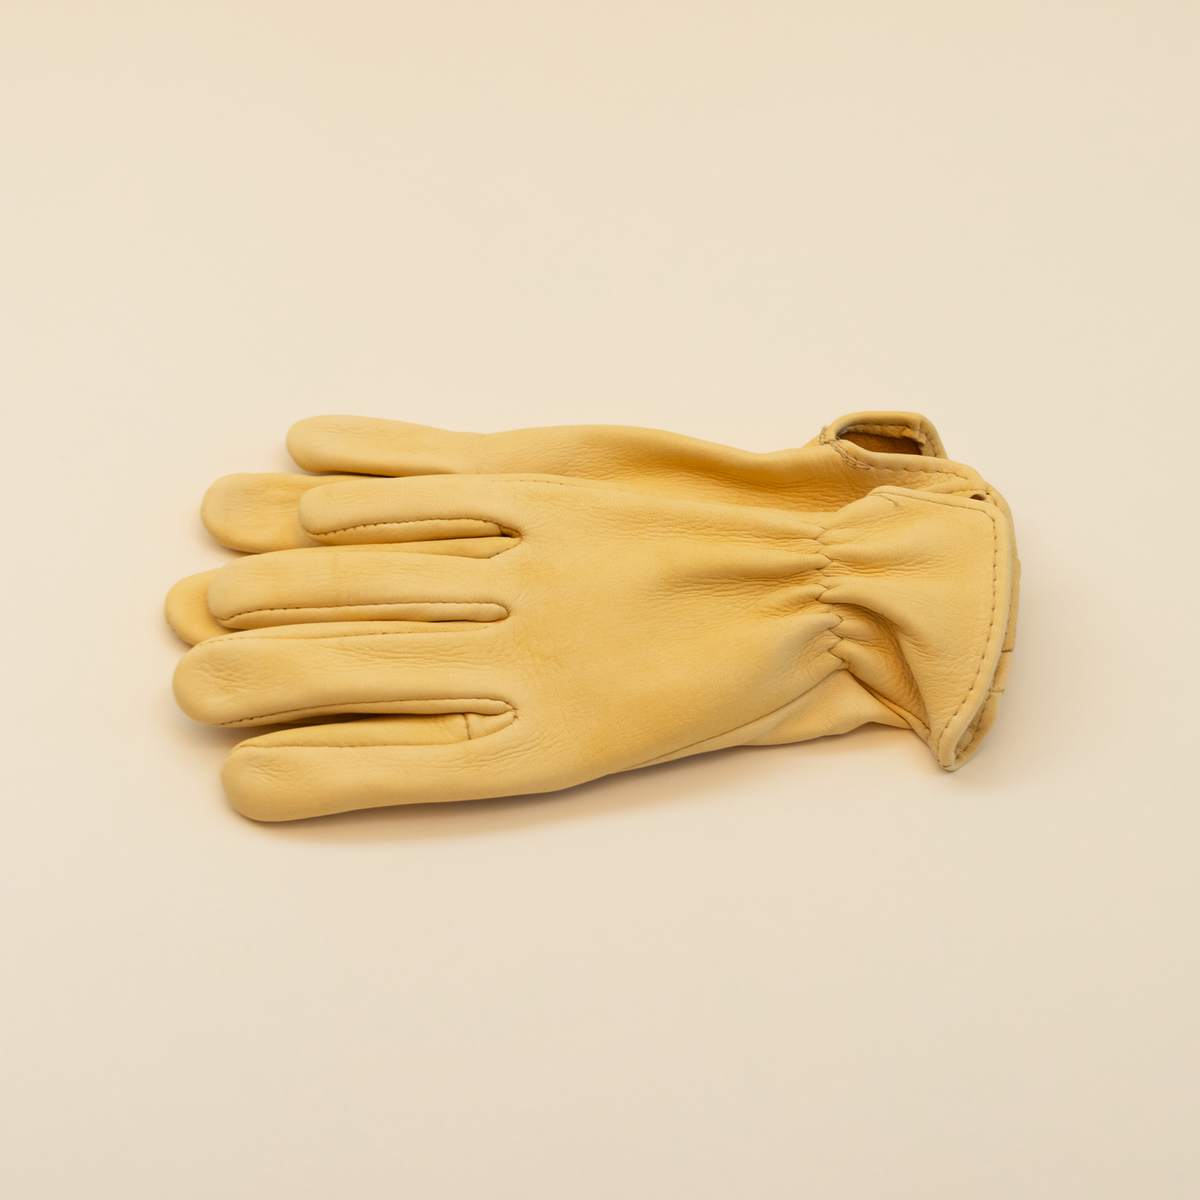 Roper Working Gloves